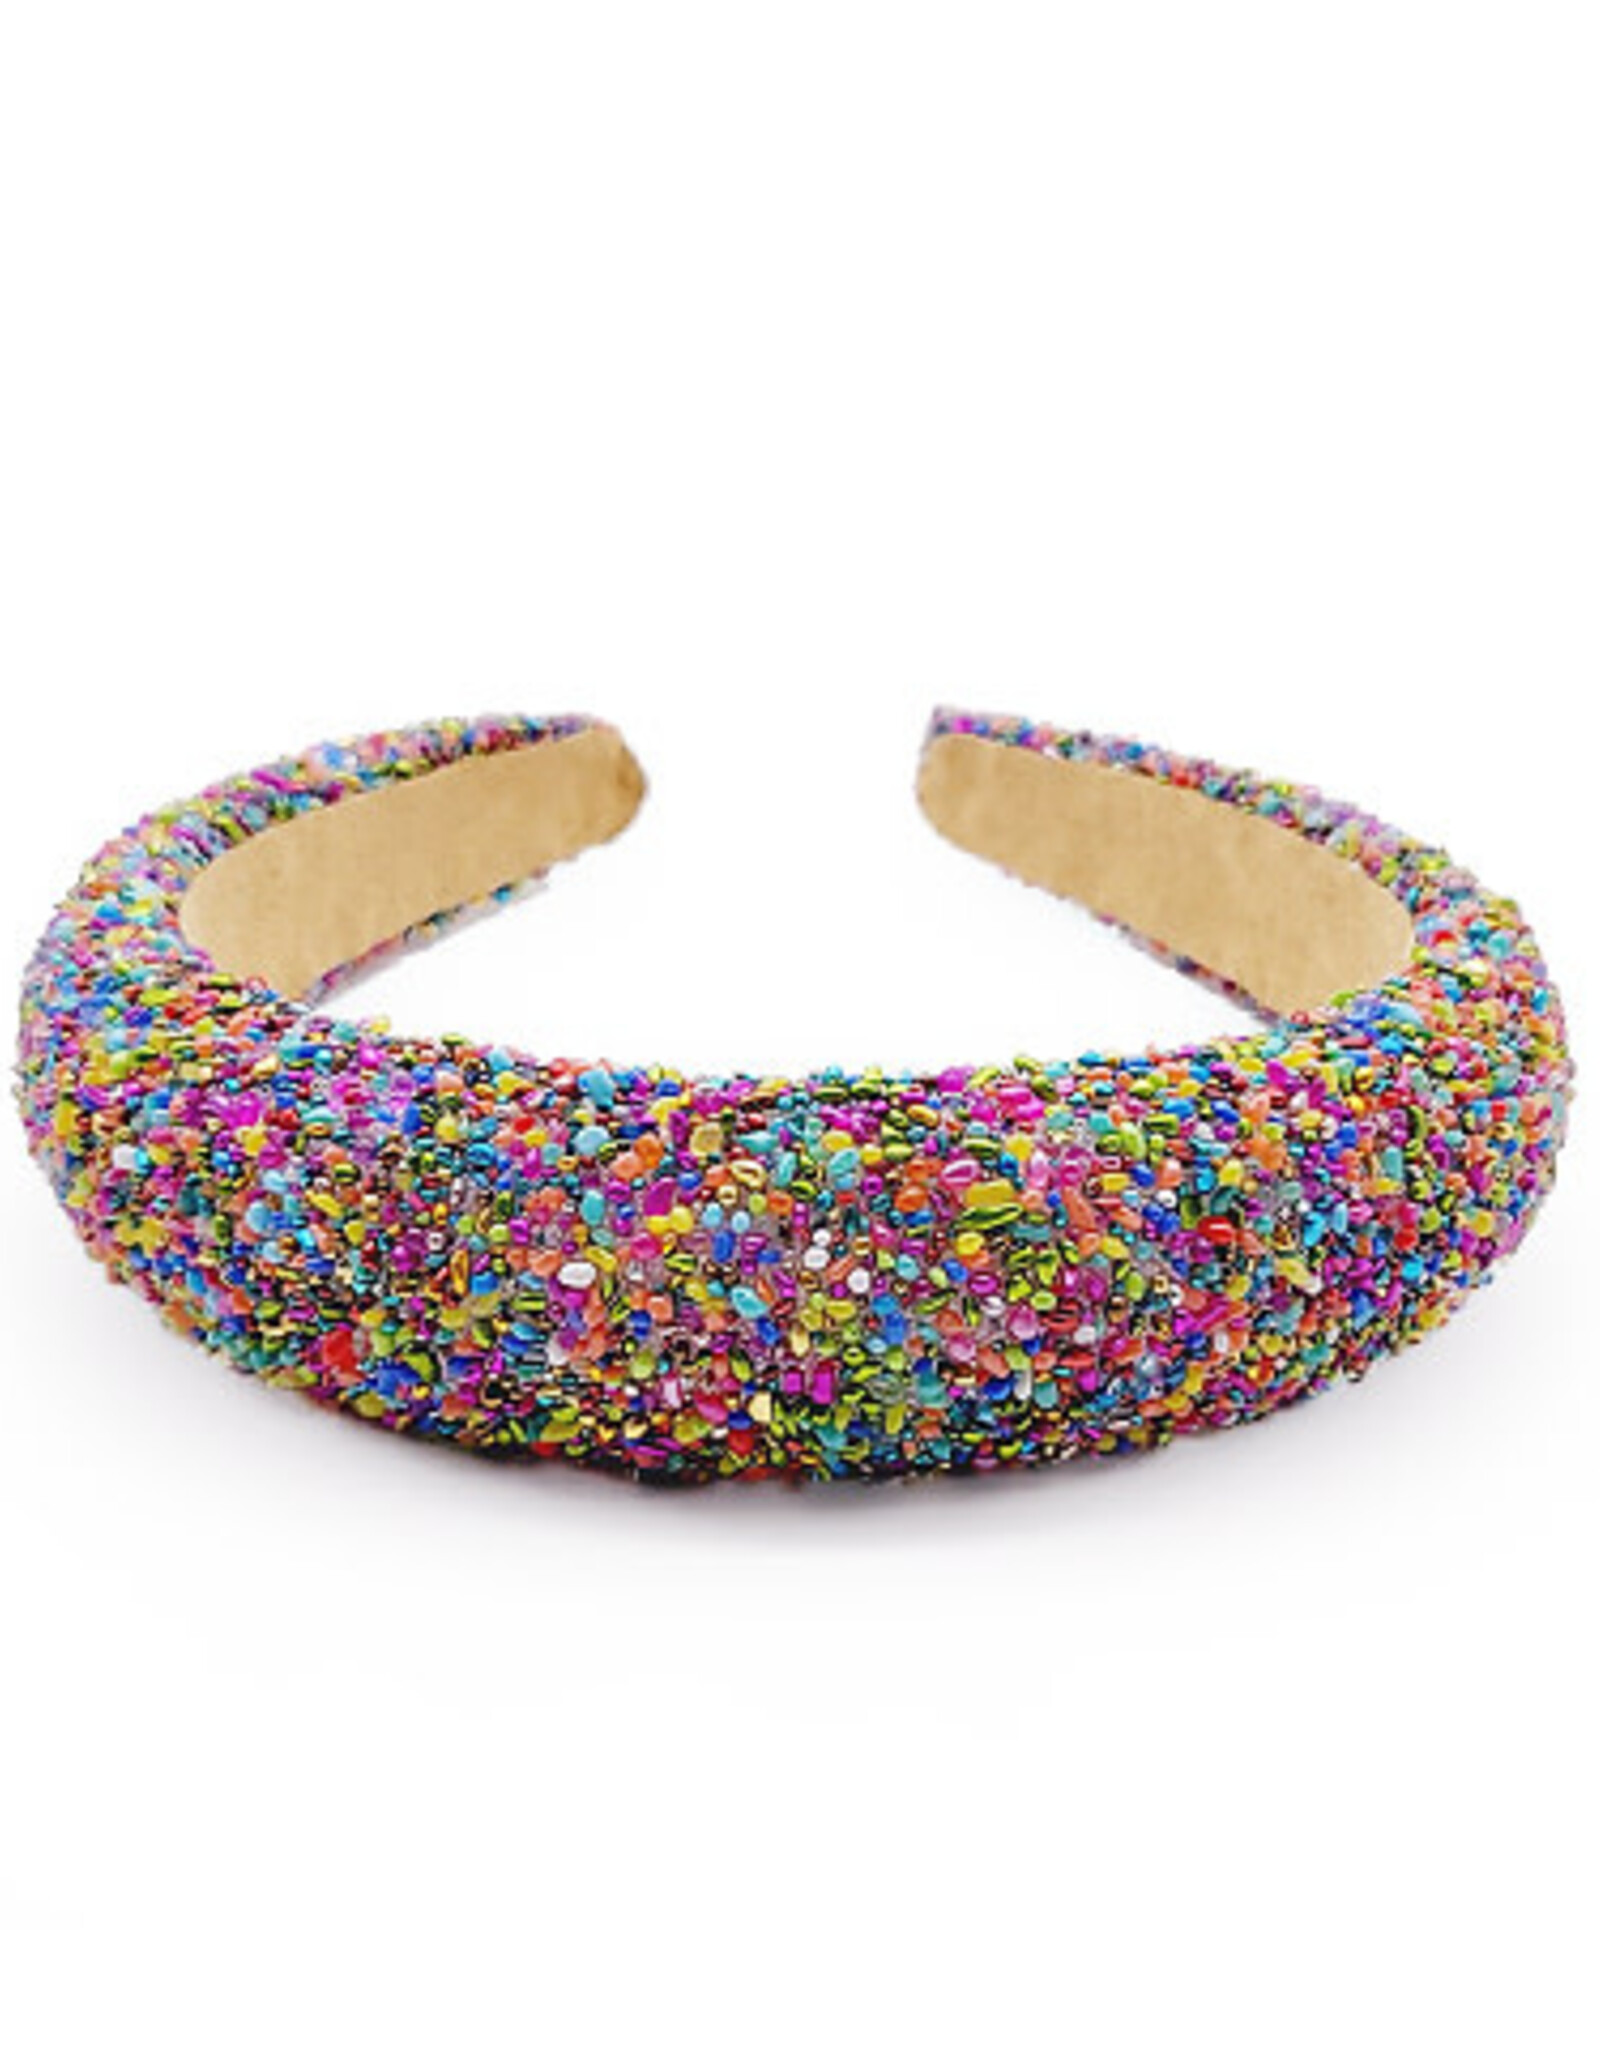 Confetti Beaded Headband in Multi